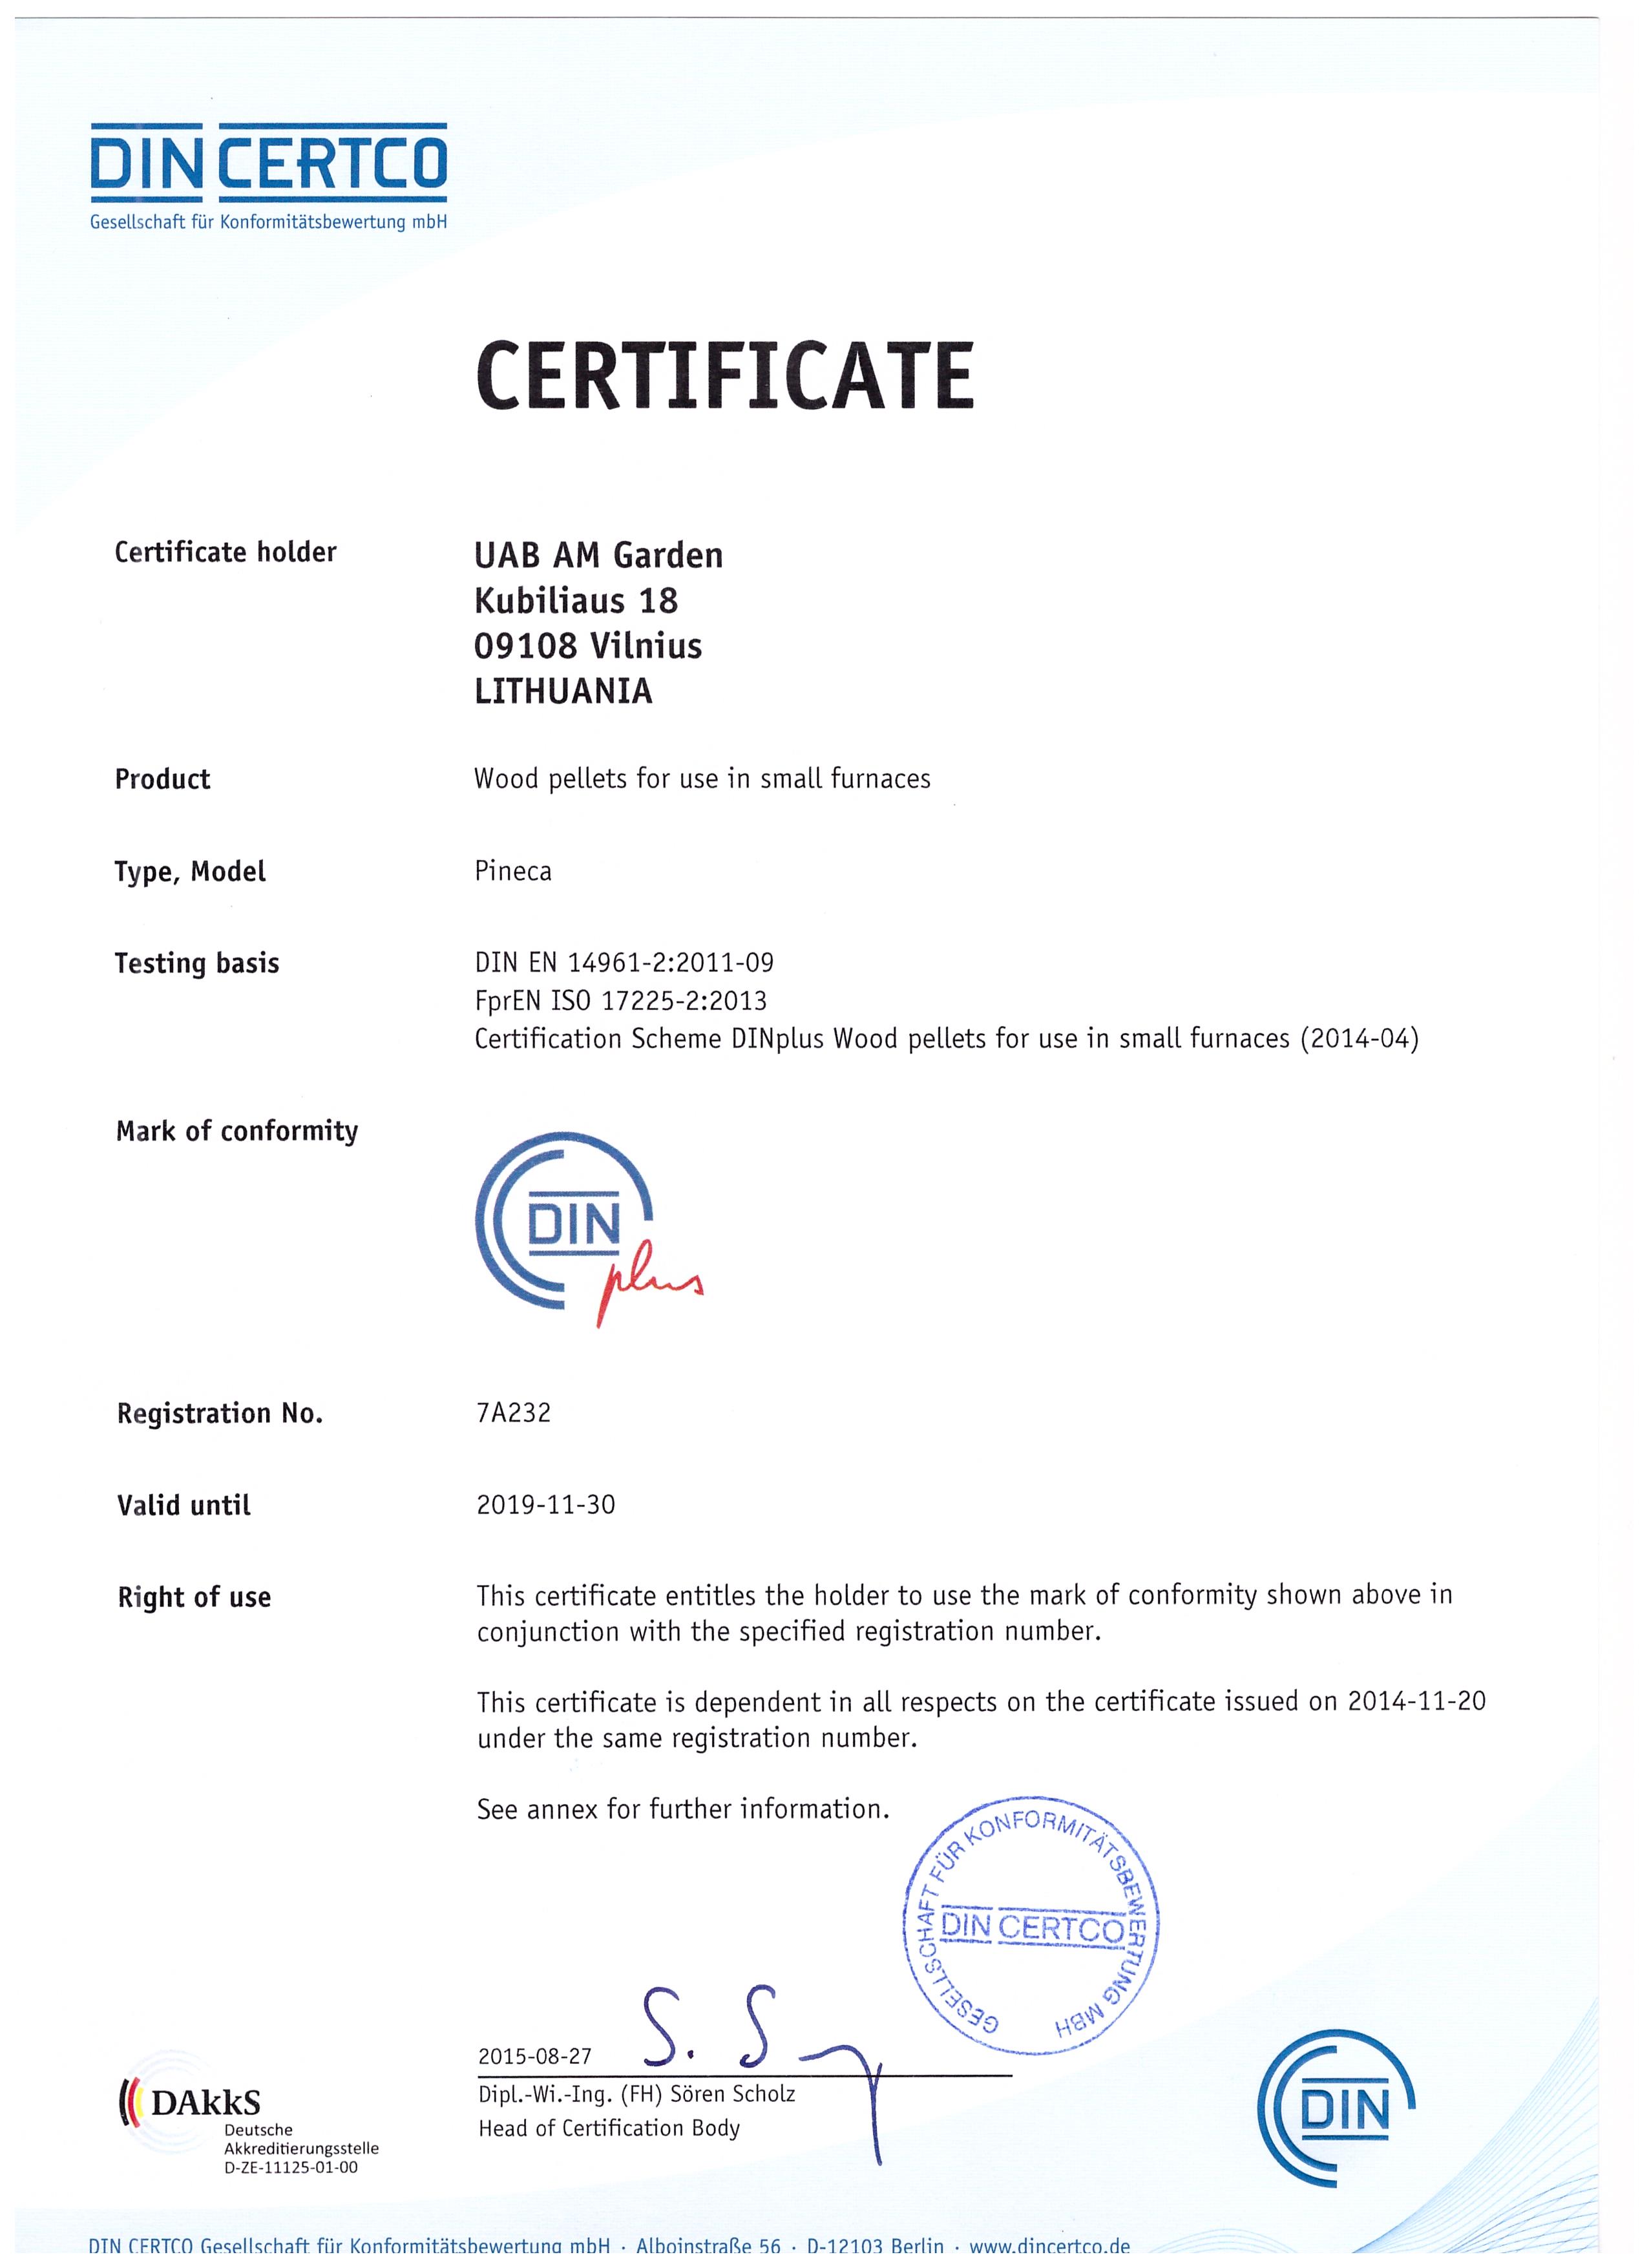 DIN Certificate